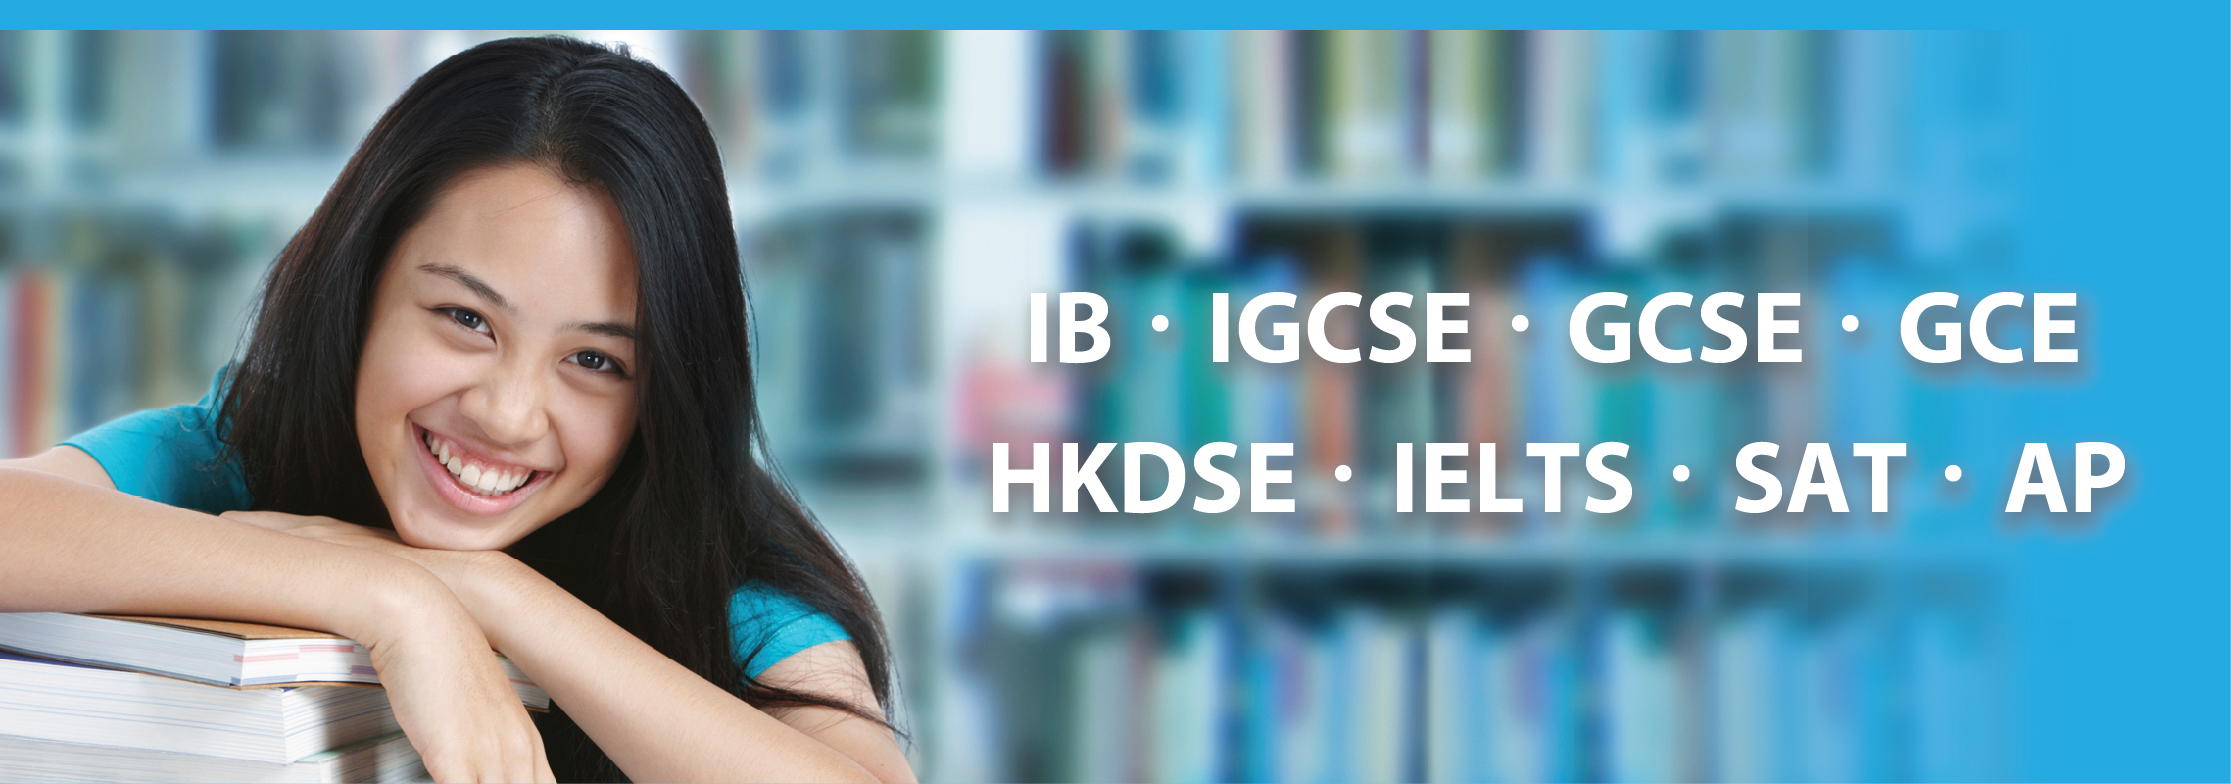 IB-HKDSE-IGCSE-GCE-IELTS-SAT-BTEC